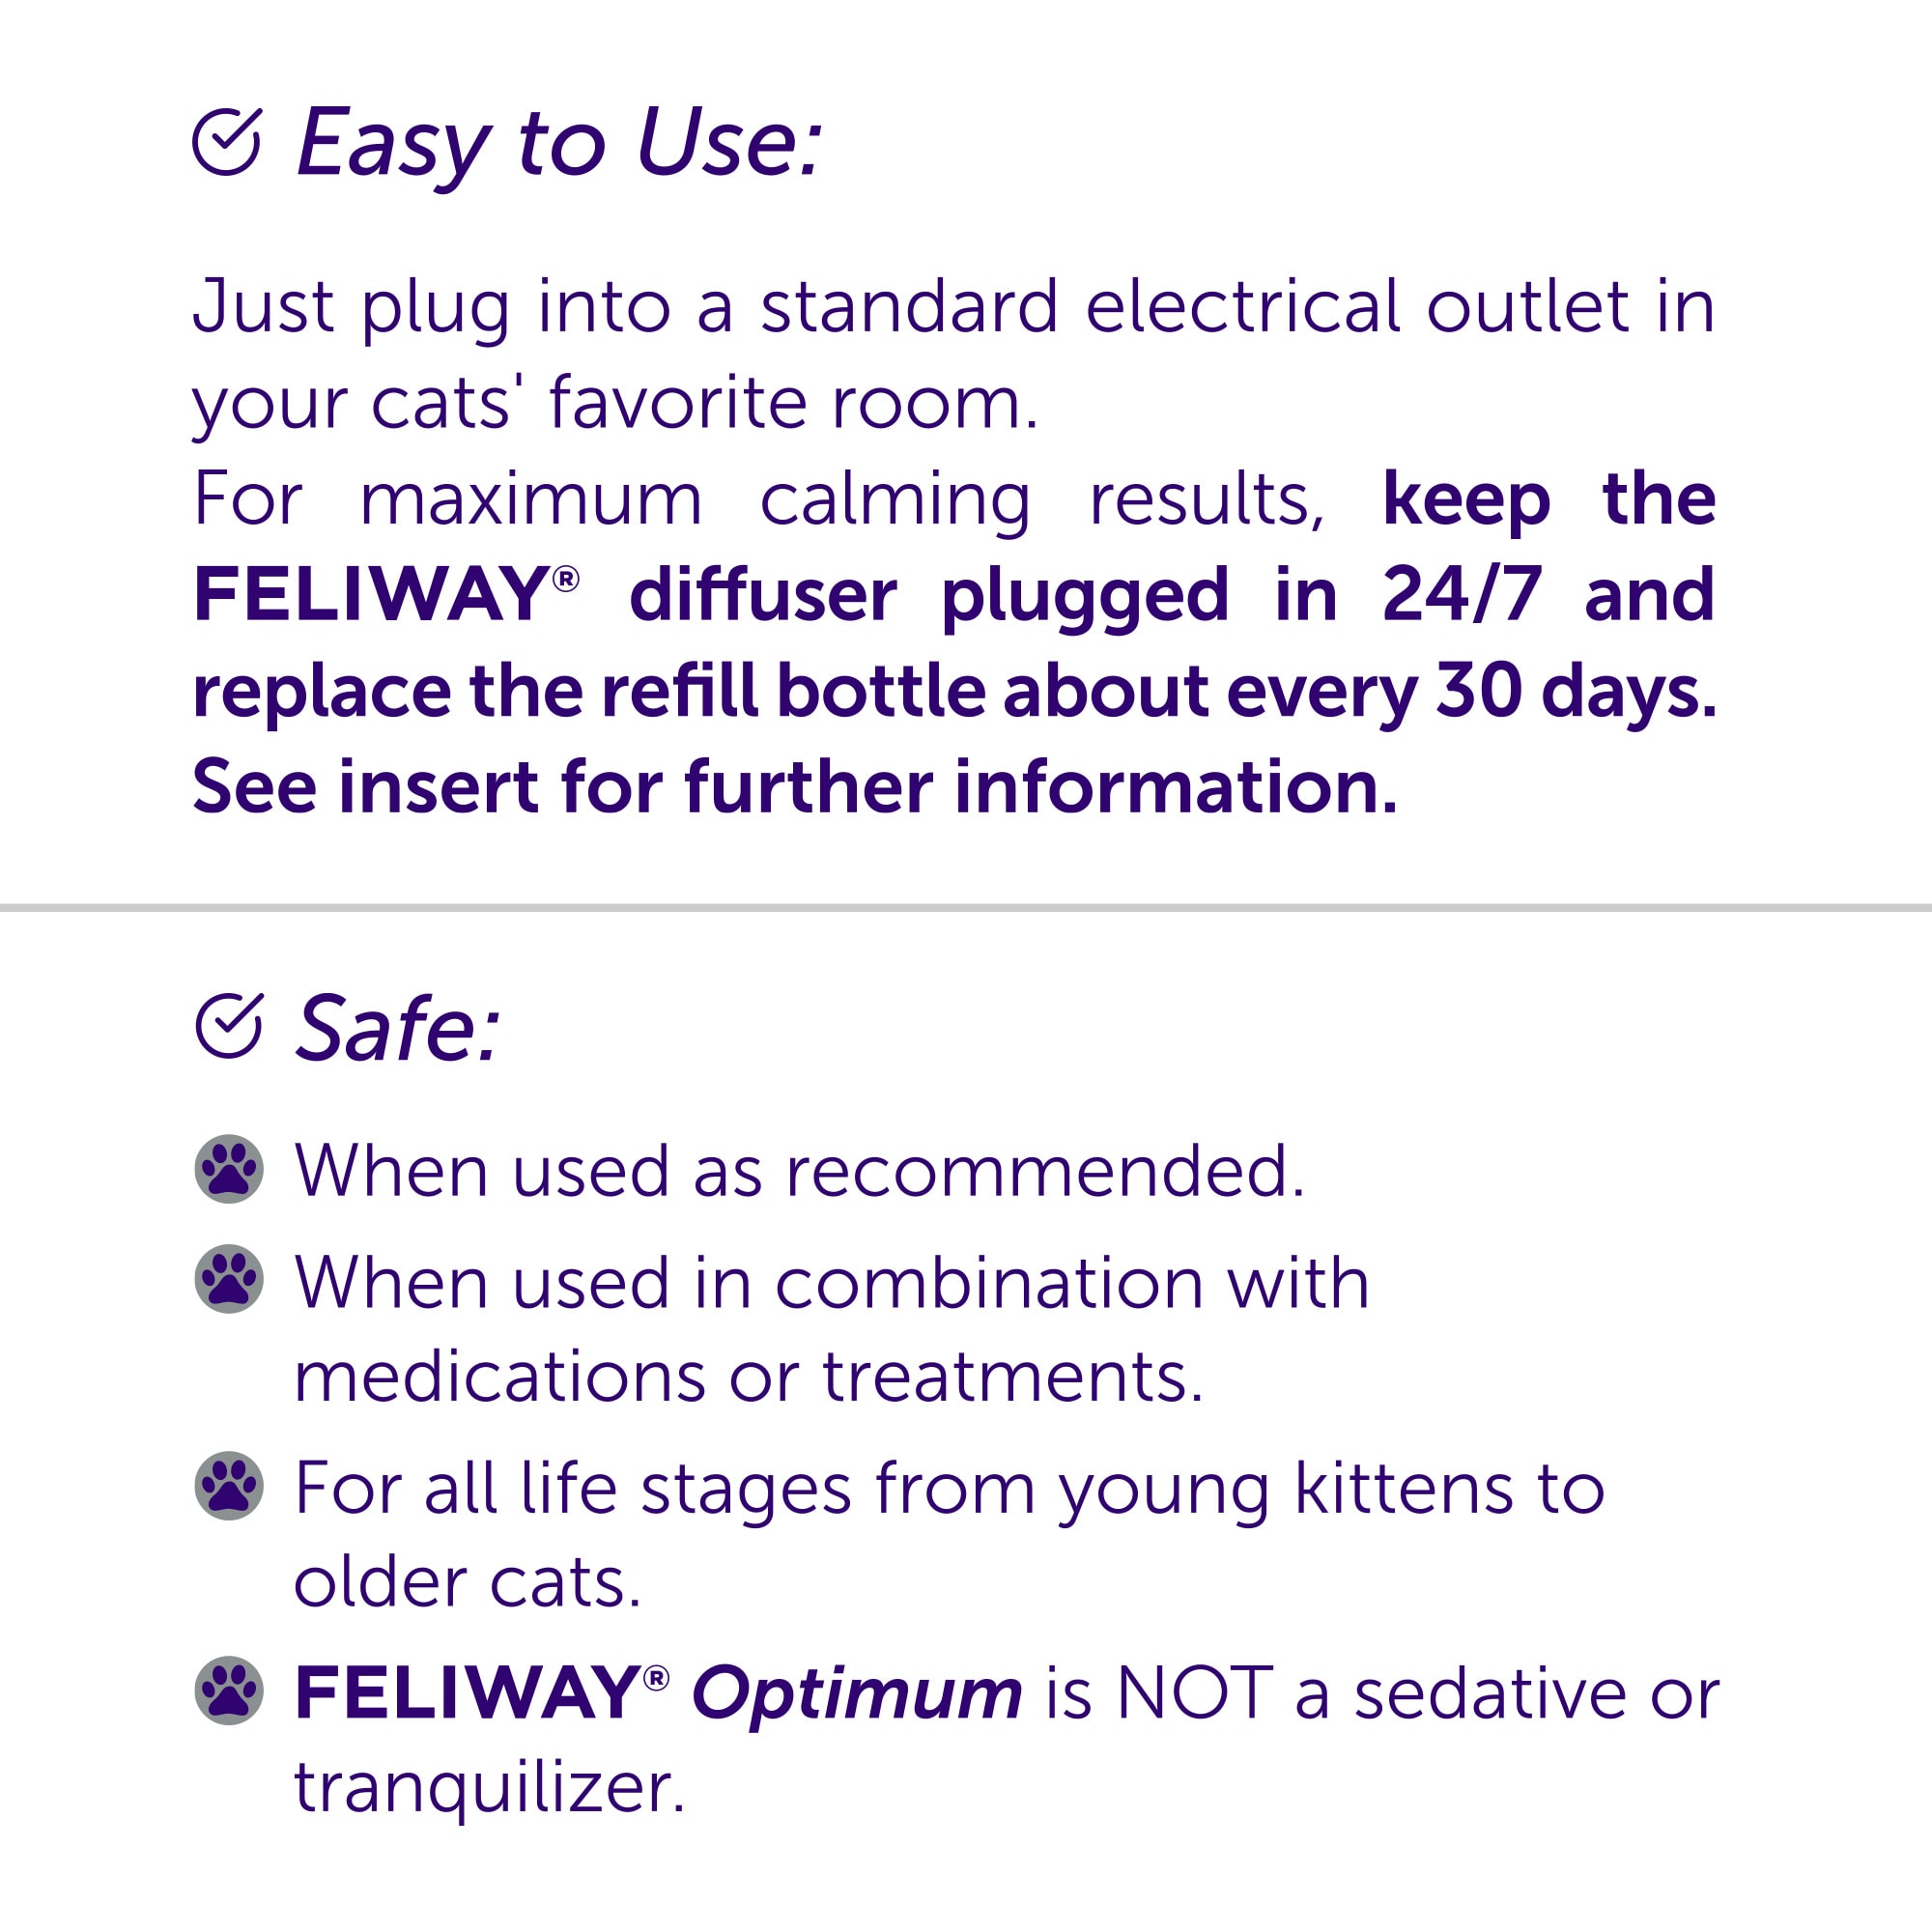 Feliway optimum recharge - JMT Alimentation Animale